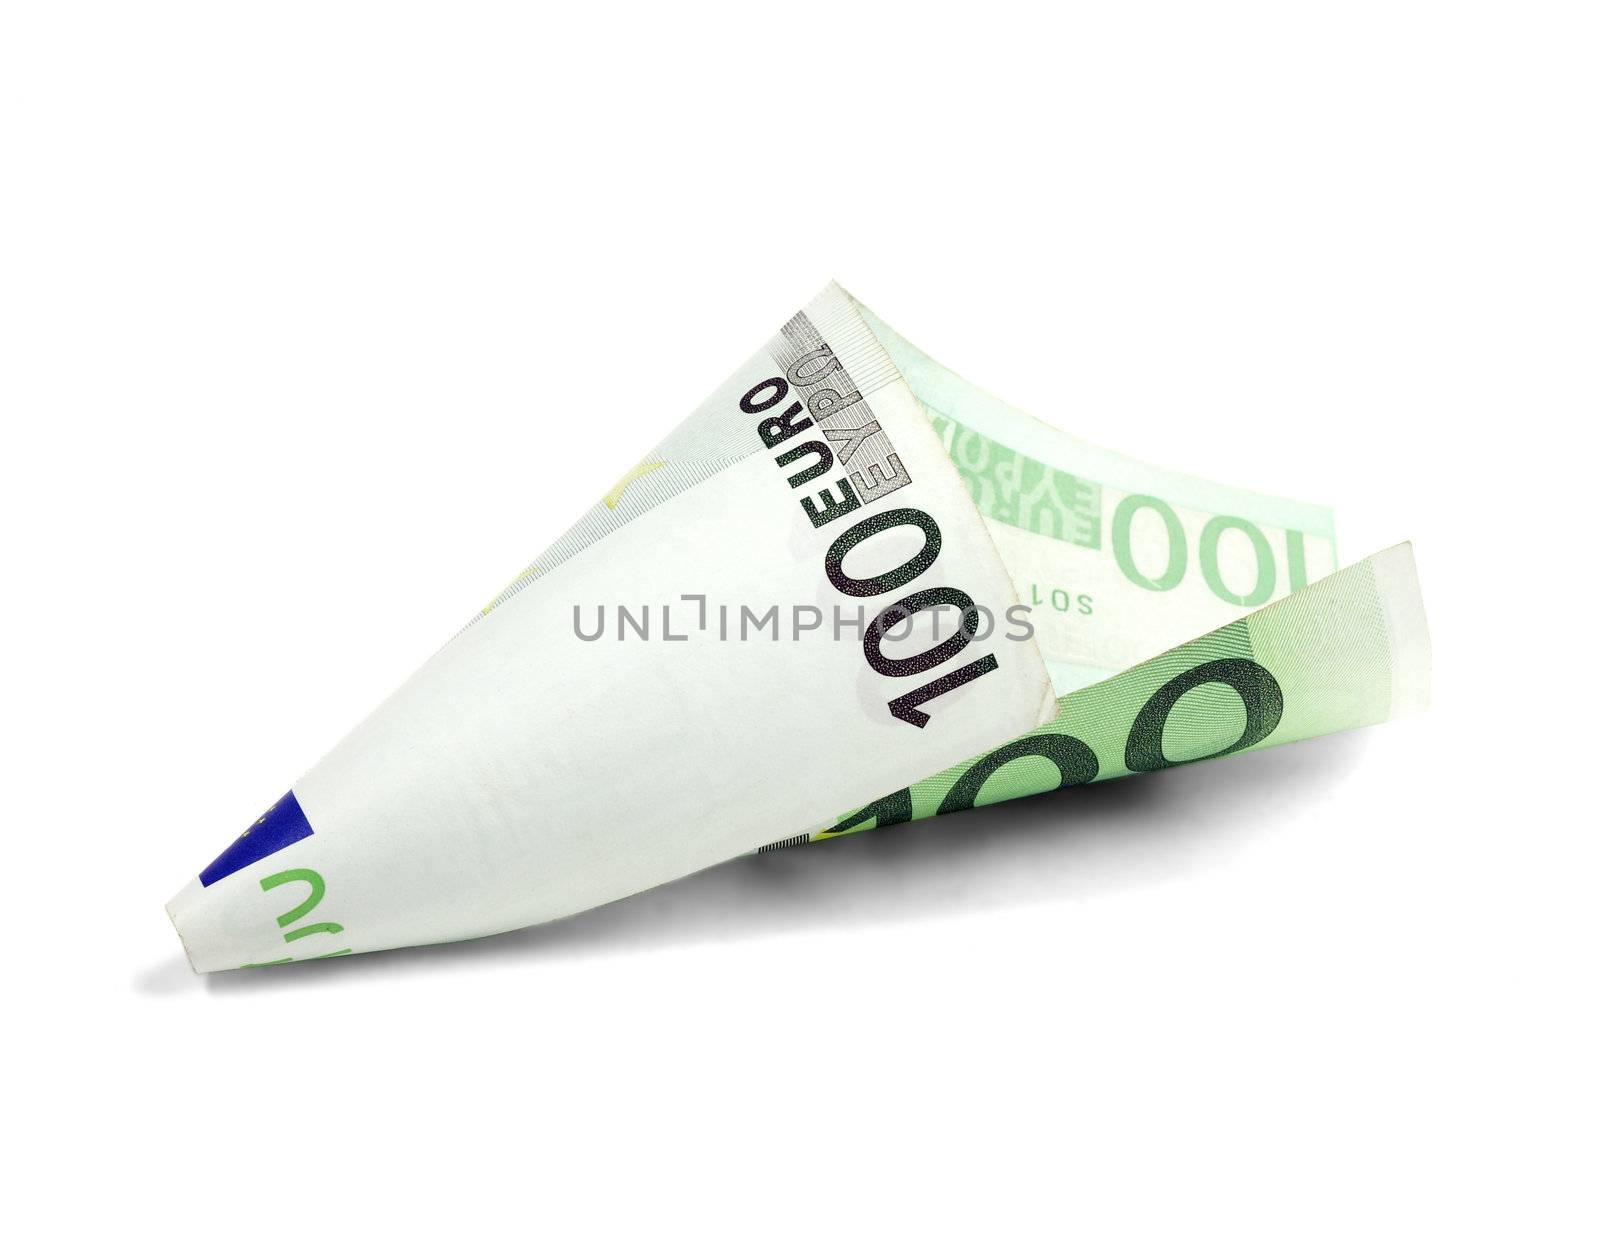 one undred euro bill  by keko64